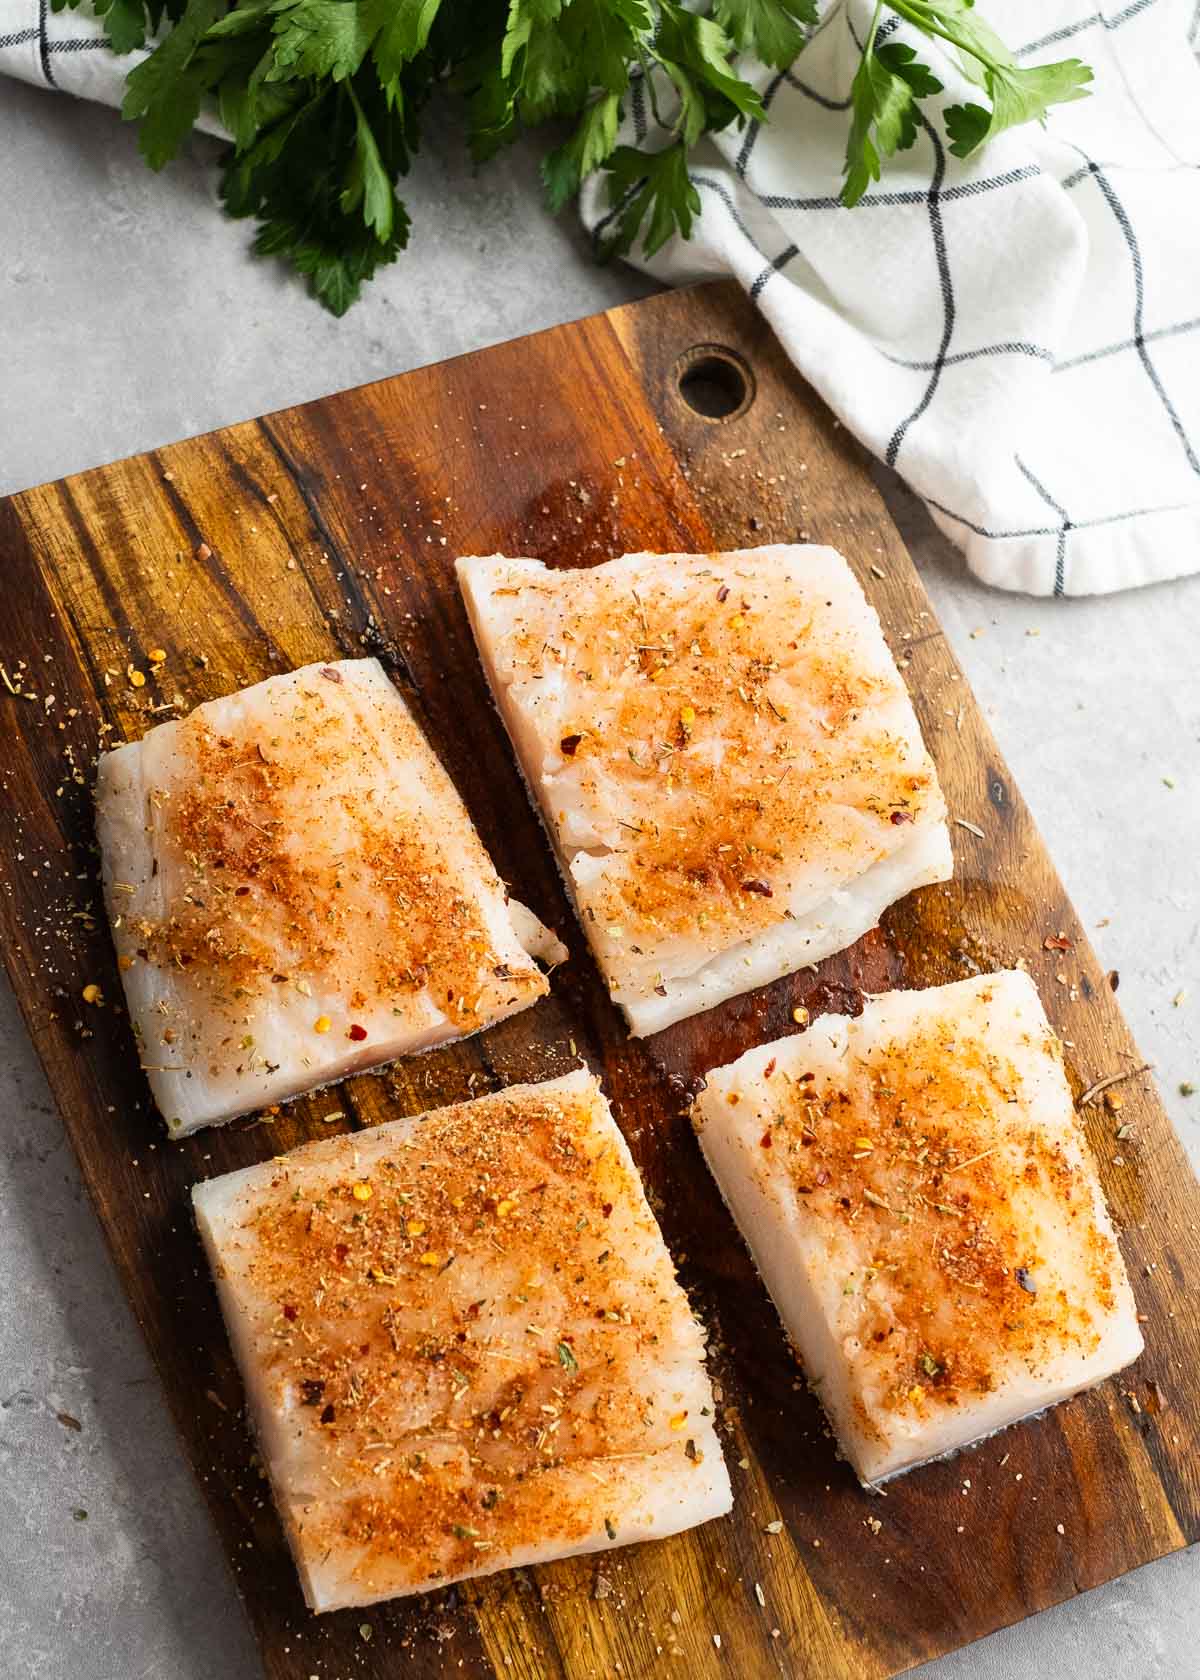 Four raw seasoned cod filets on wooden cutting board